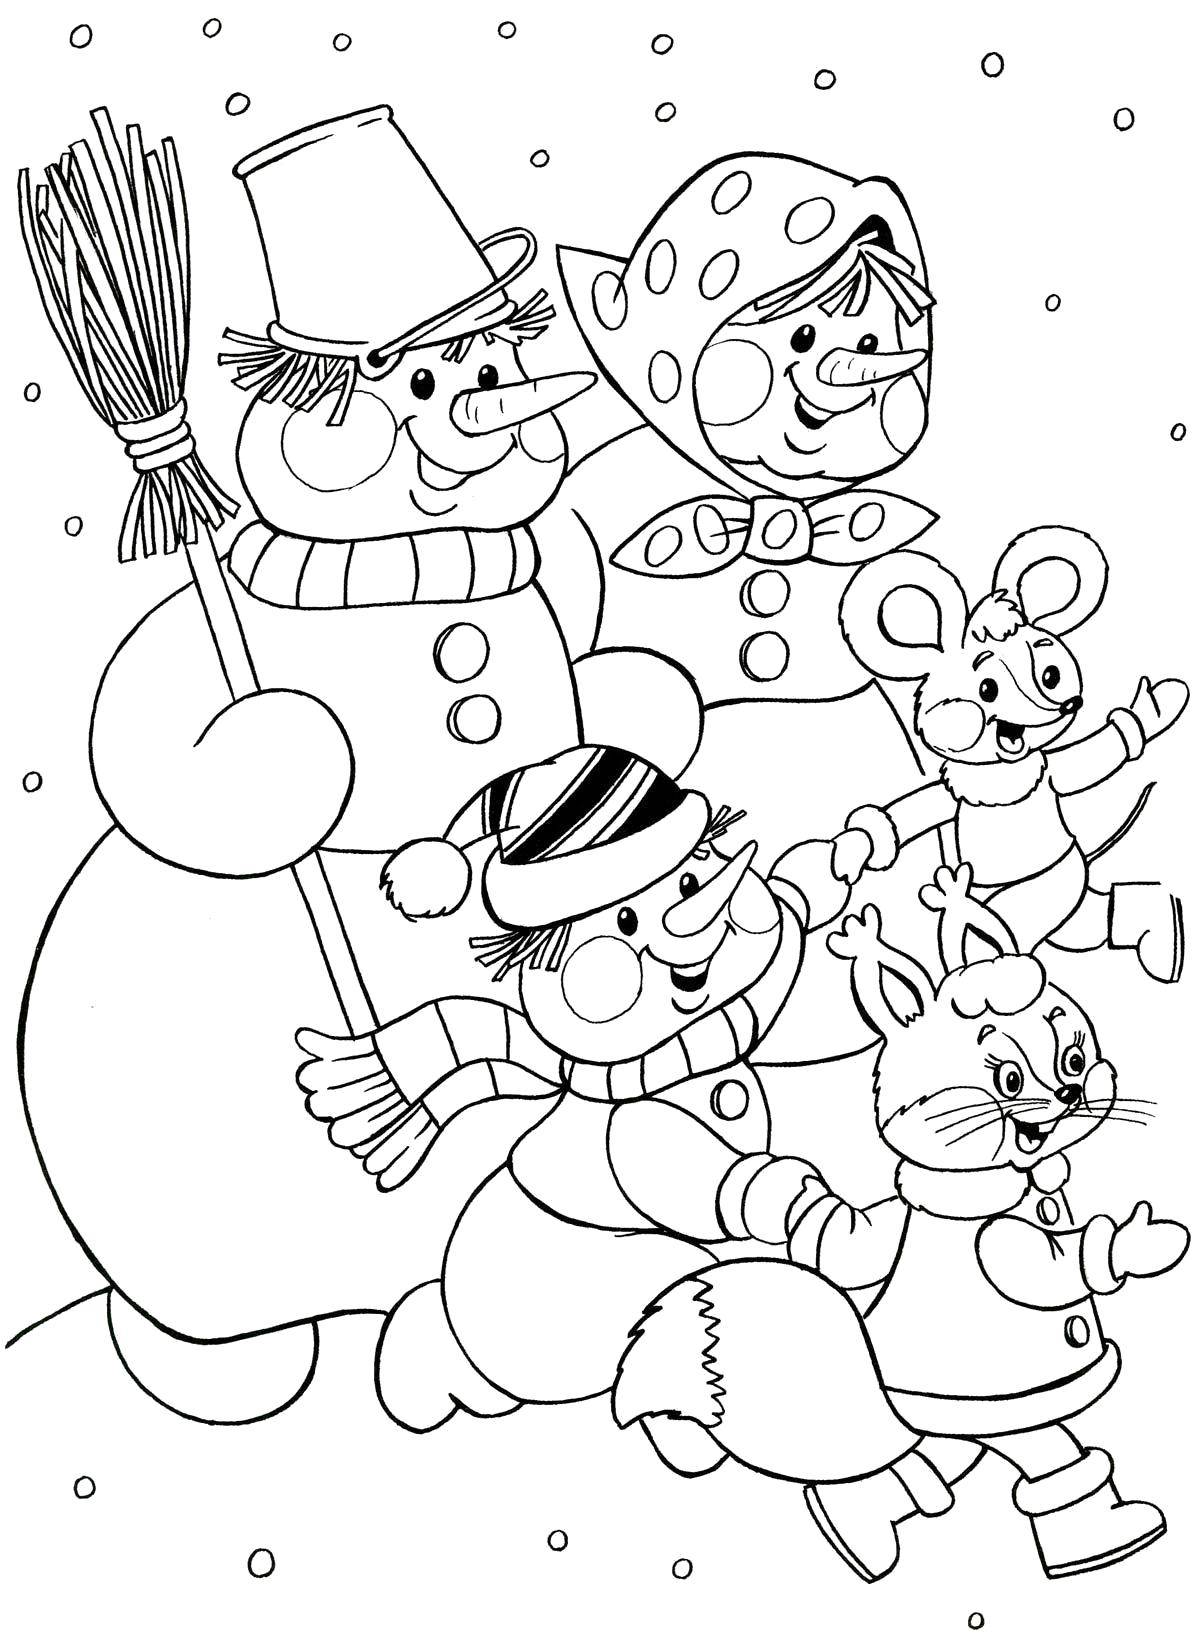 Coloring Family snowmen. Category snowman. Tags:  Snowman, snow, fun, children.